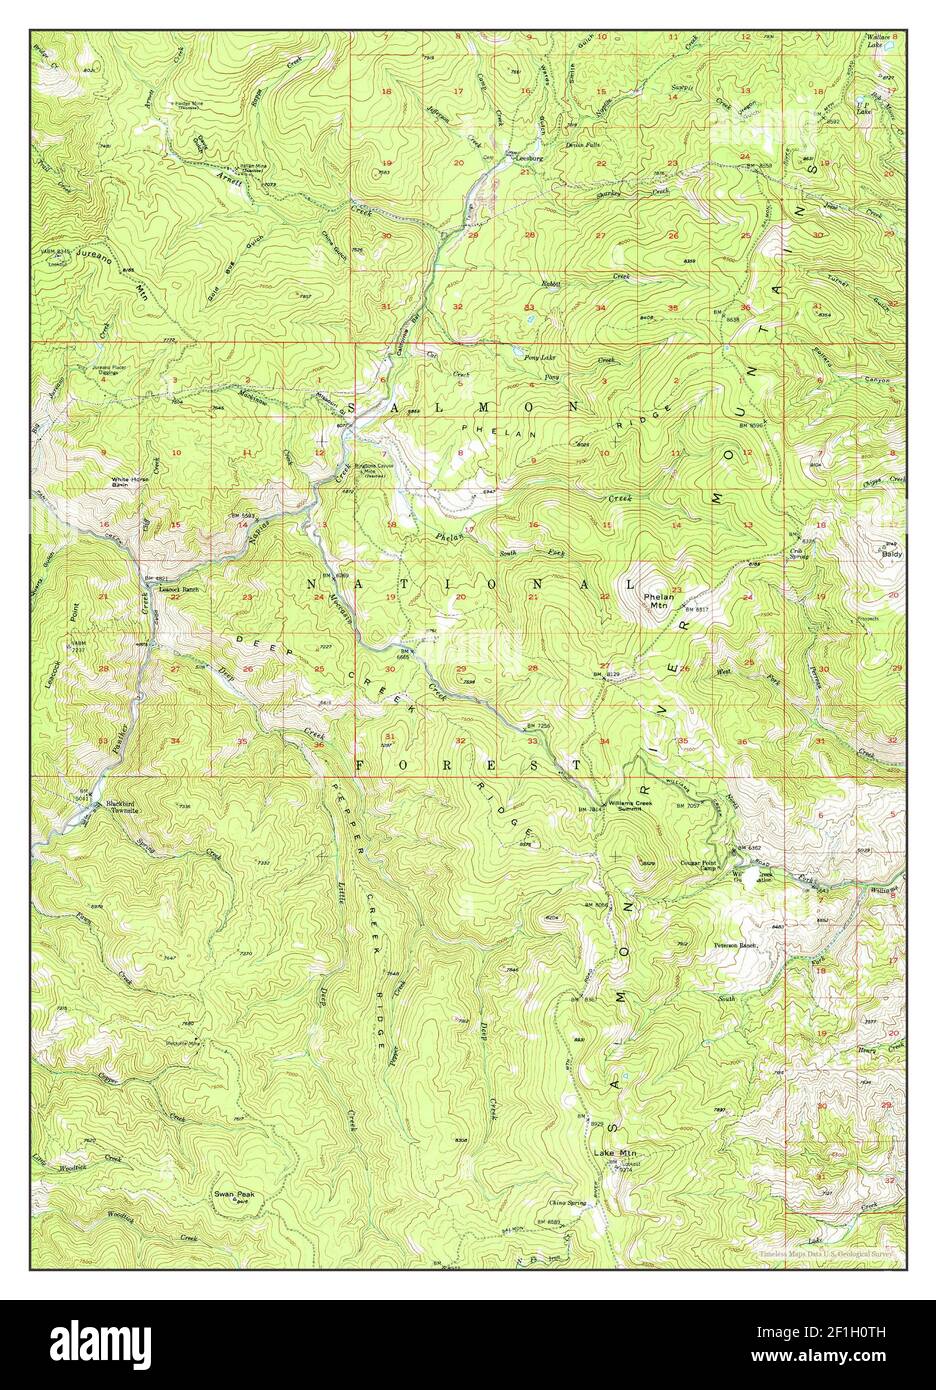 Leesburg, Idaho, map 1950, 1:62500, United States of America by Timeless Maps, data U.S. Geological Survey Stock Photo